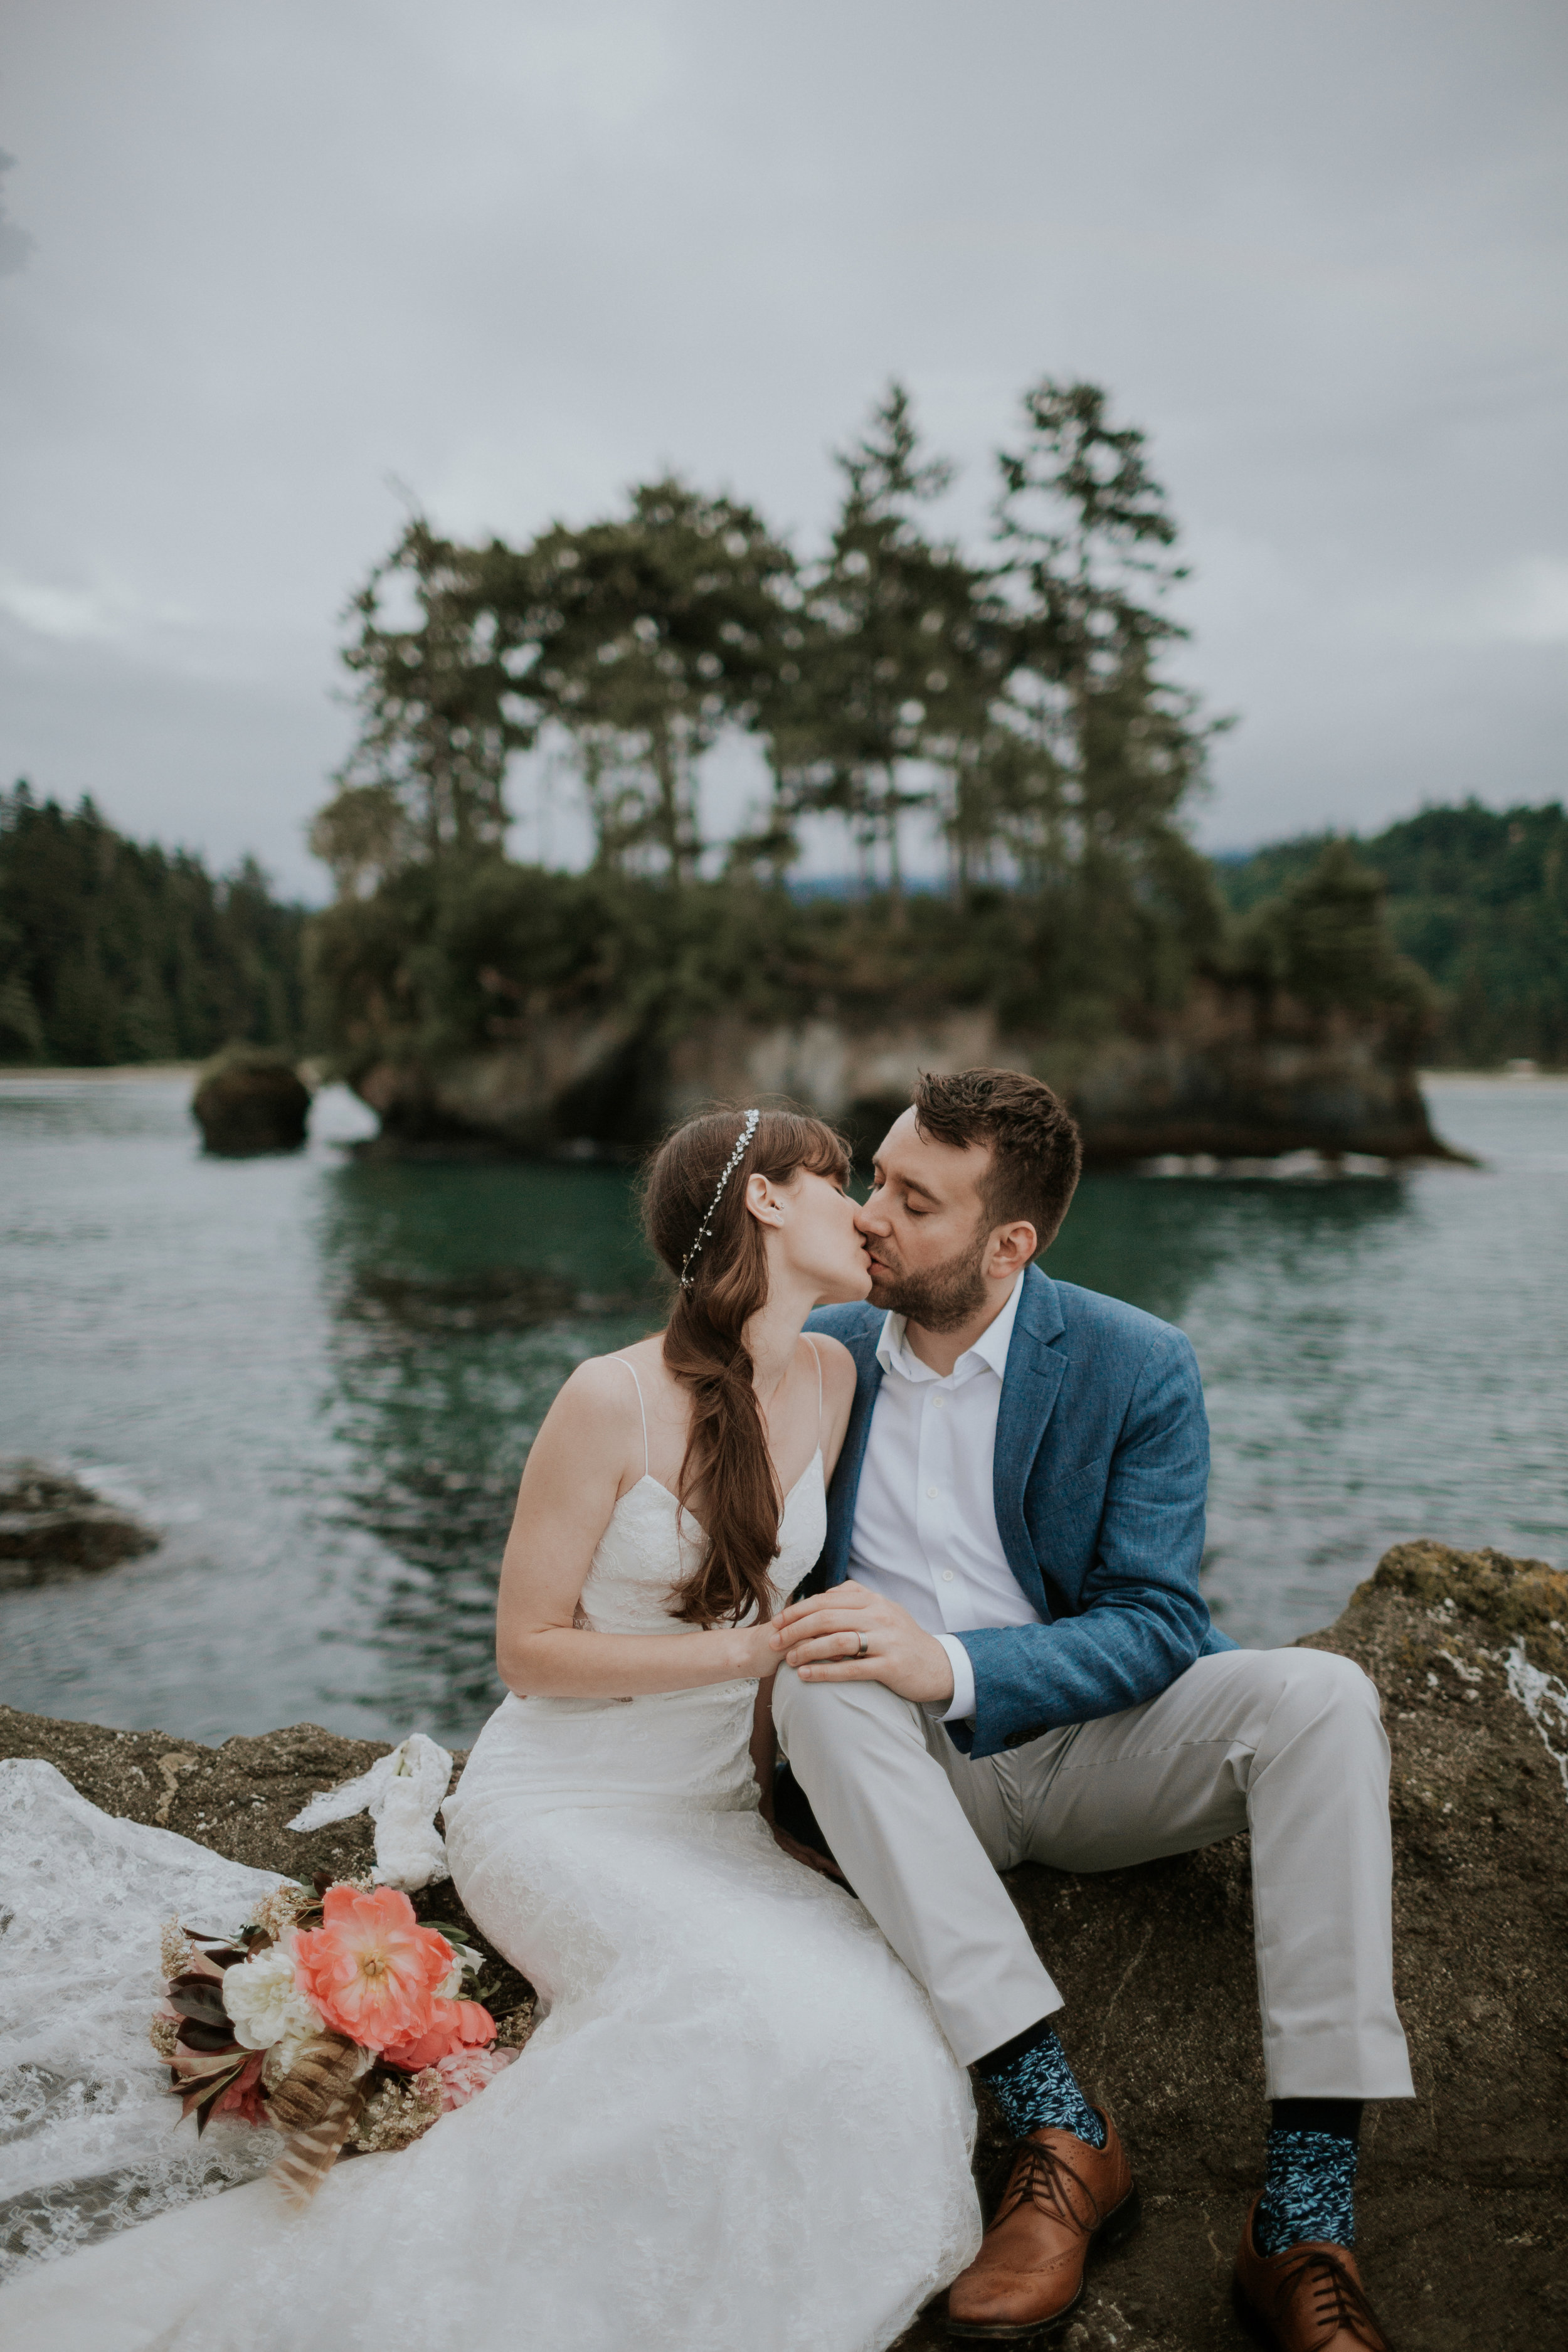 PNW-elopement-wedding-engagement-olympic national park-port angeles-hurricane ridge-lake crescent-kayla dawn photography- photographer-photography-kayladawnphoto-321.jpg